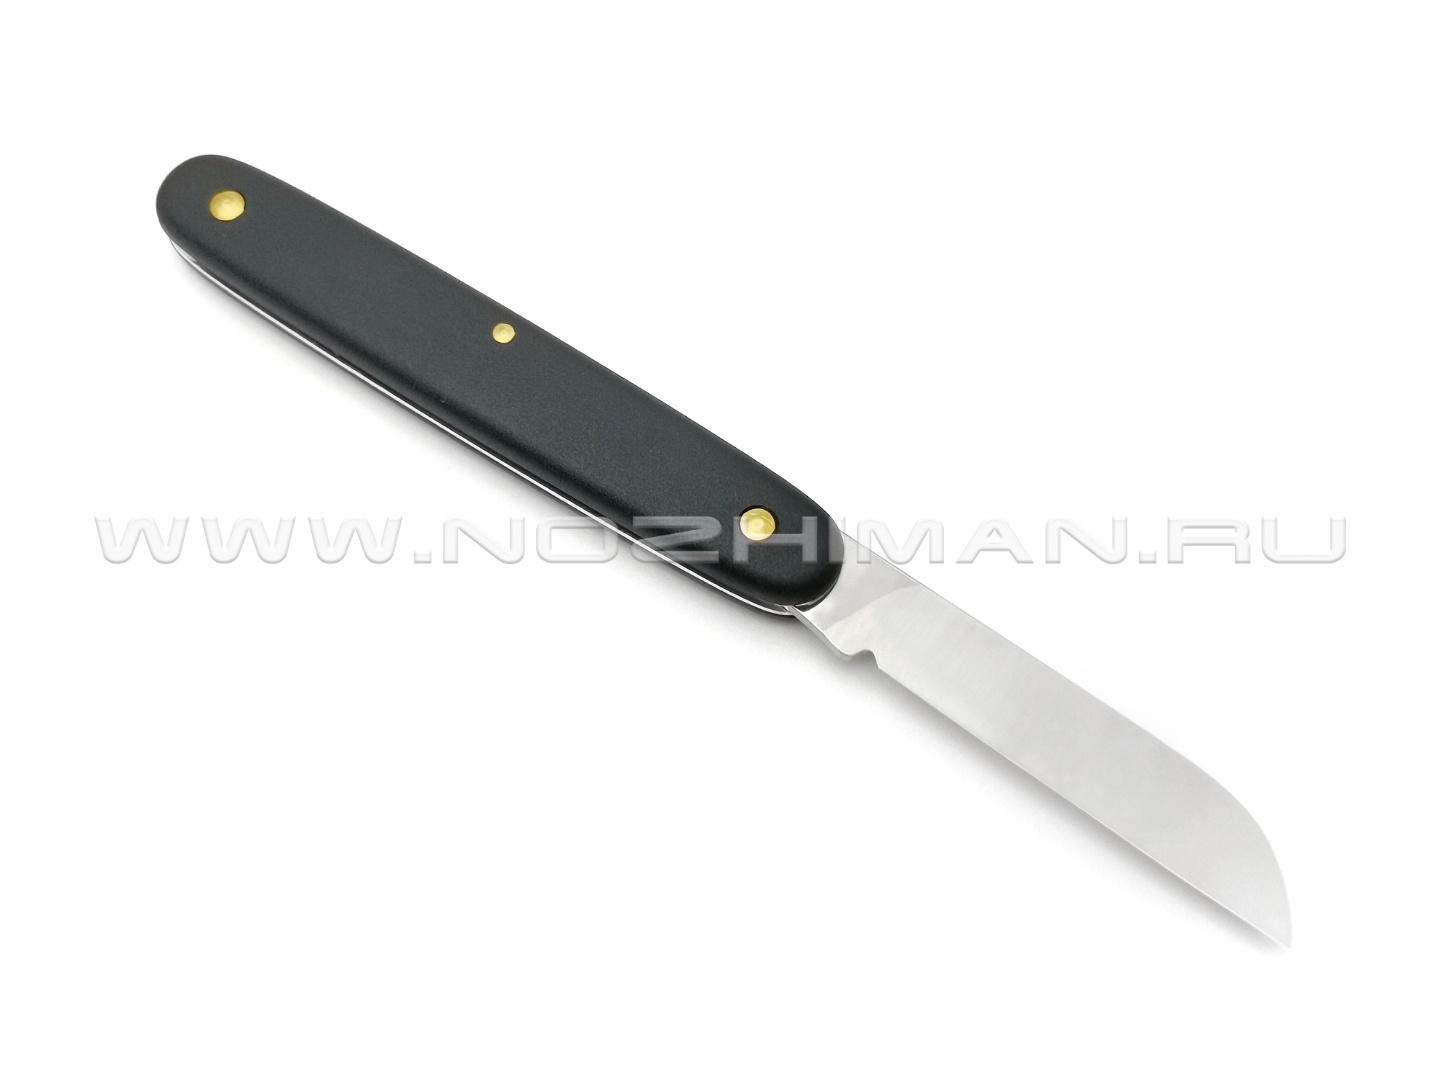 Нож Victorinox 3.9050.3 Floral Black сталь X55CrMo14, рукоять Nylon